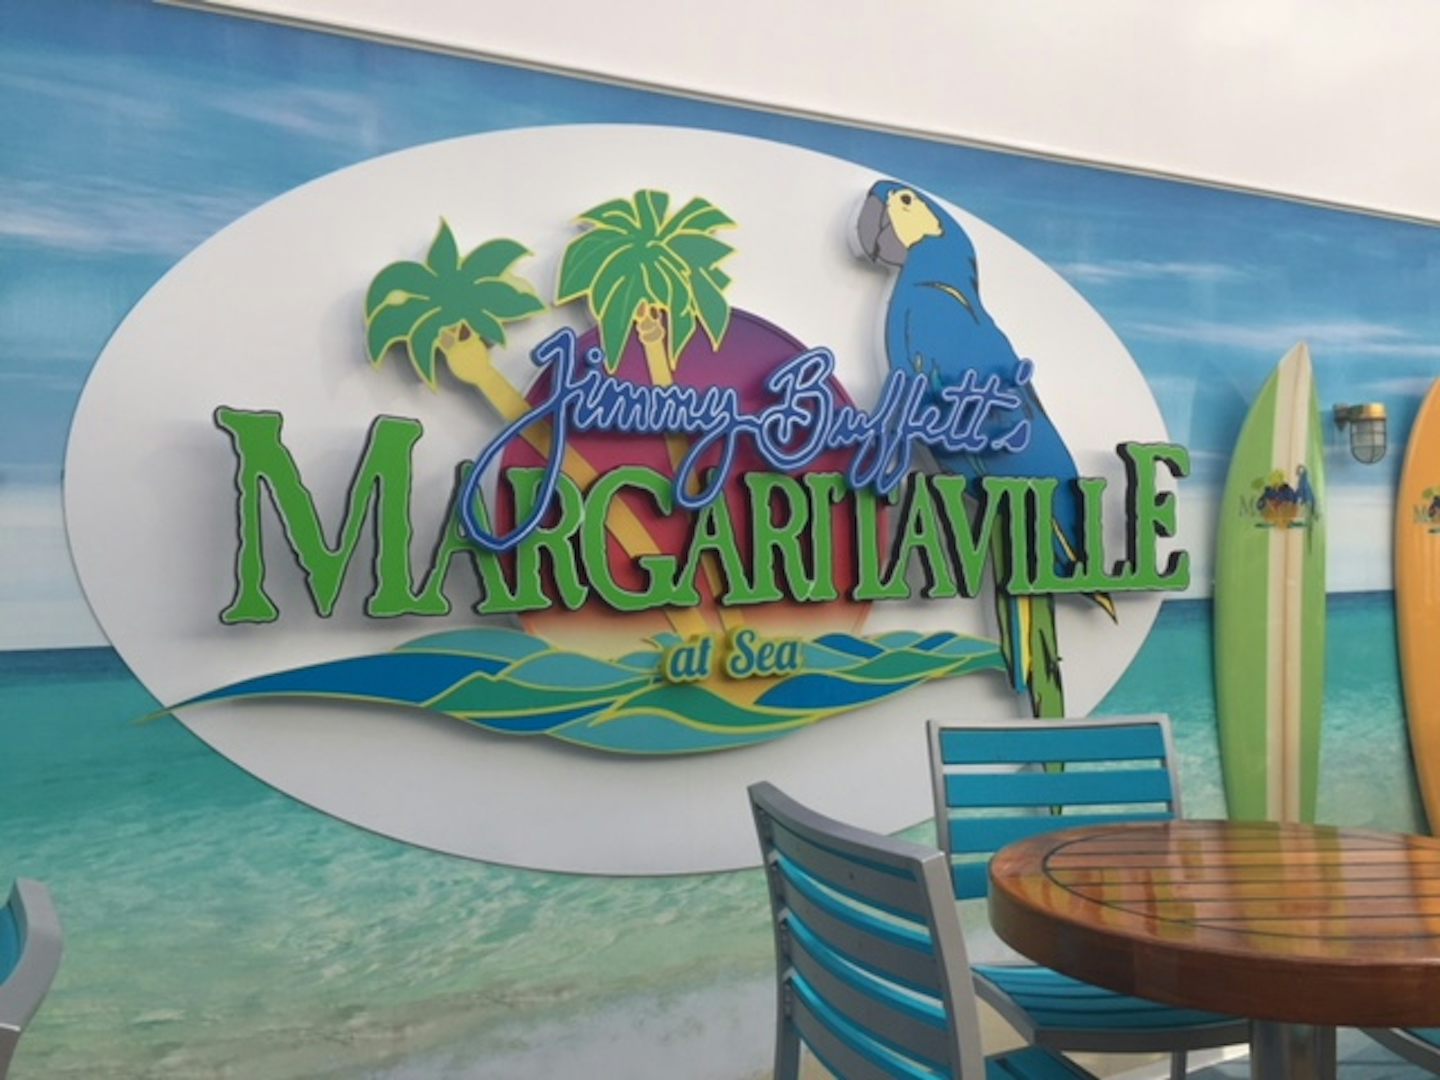 Margaritaville restaurant onboard the Escape